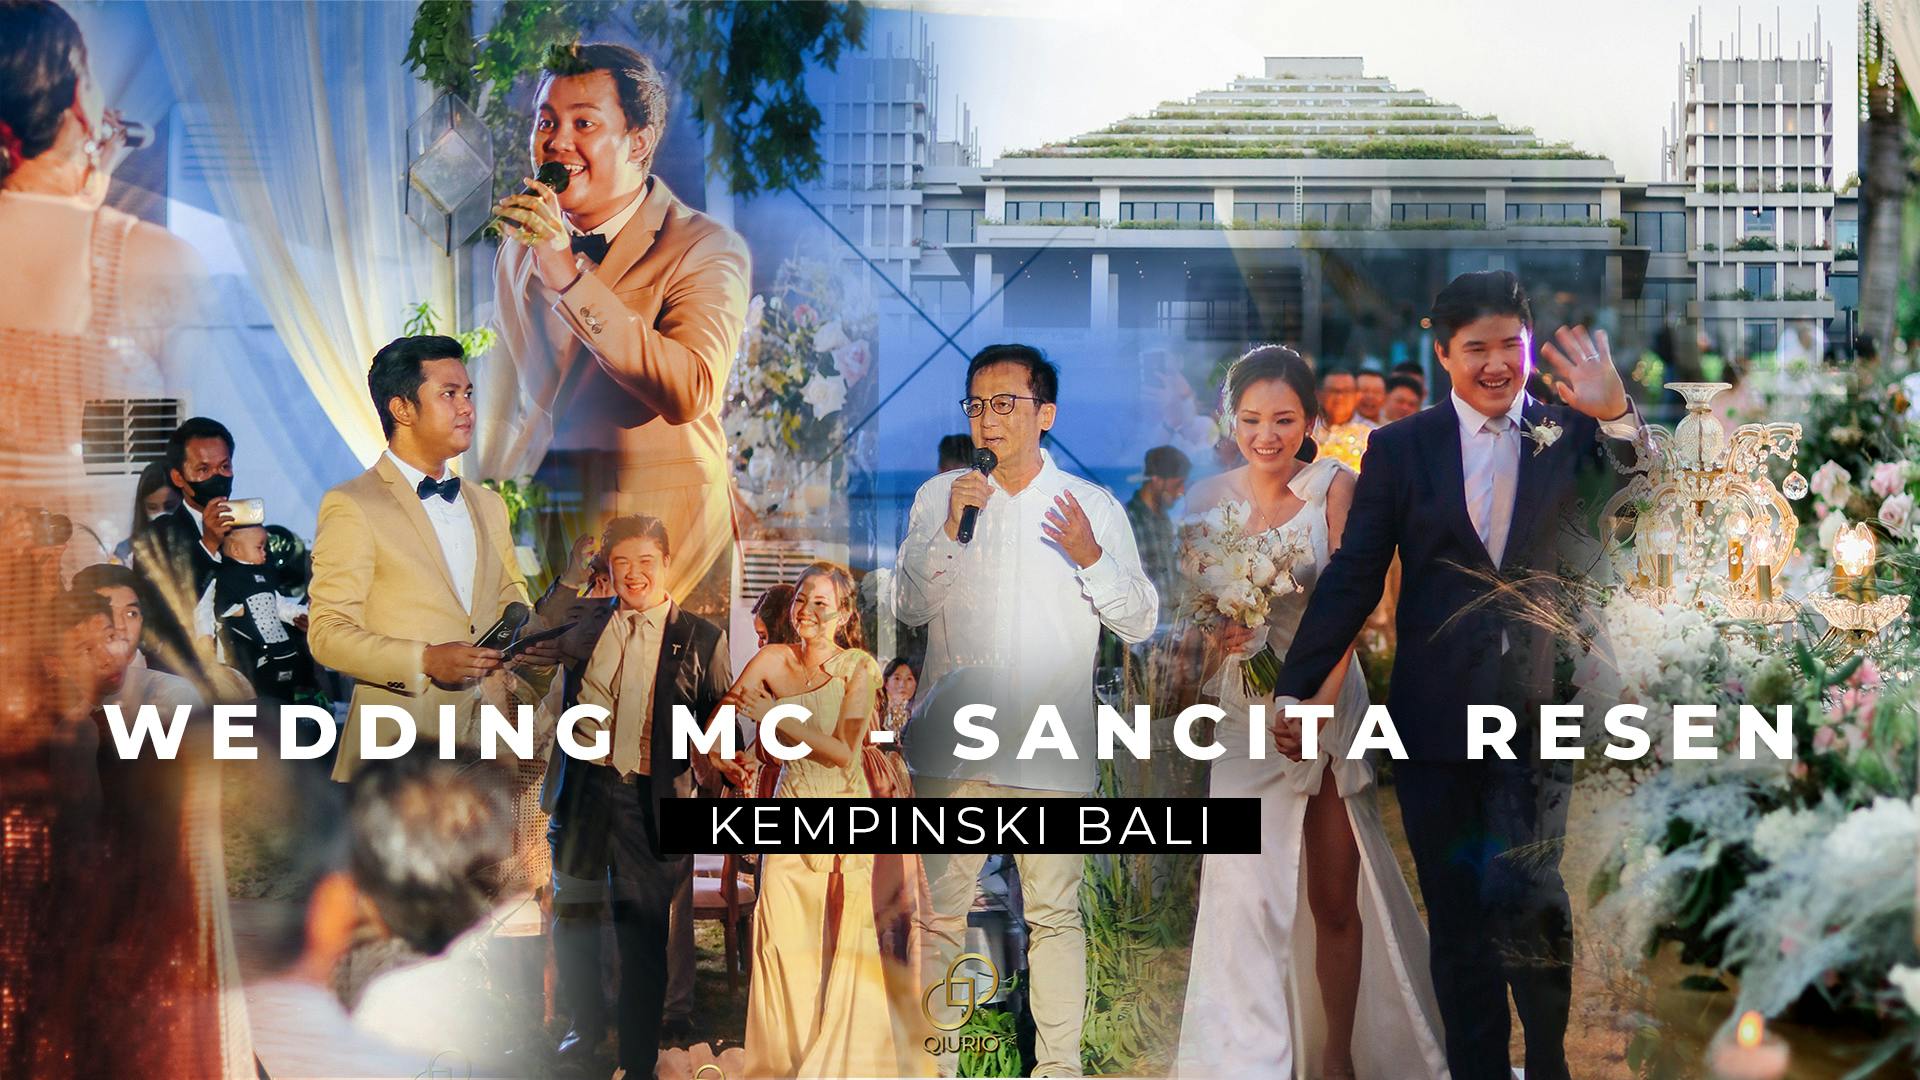 Sancita Resen - Wedding MC @Kempinski